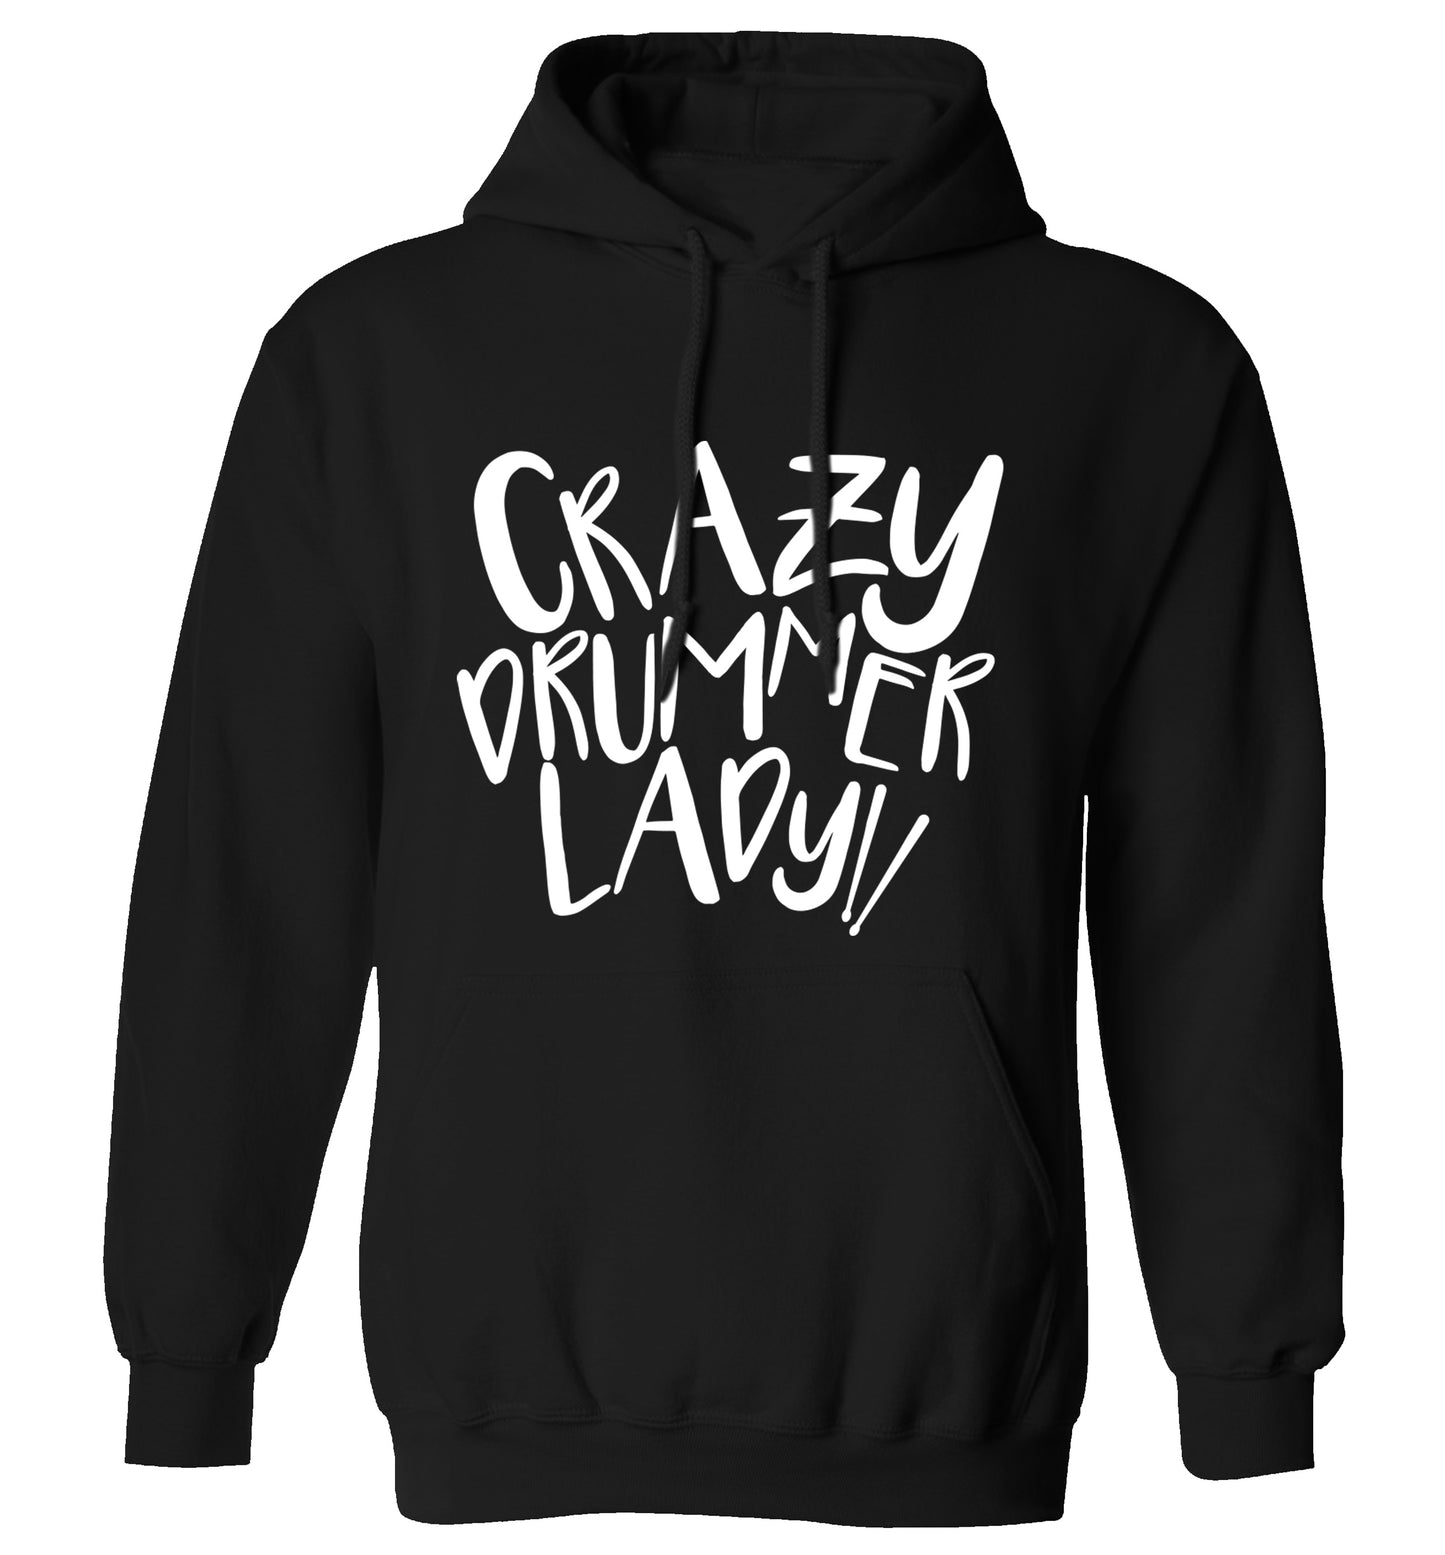 Crazy drummer lady adults unisex black hoodie 2XL